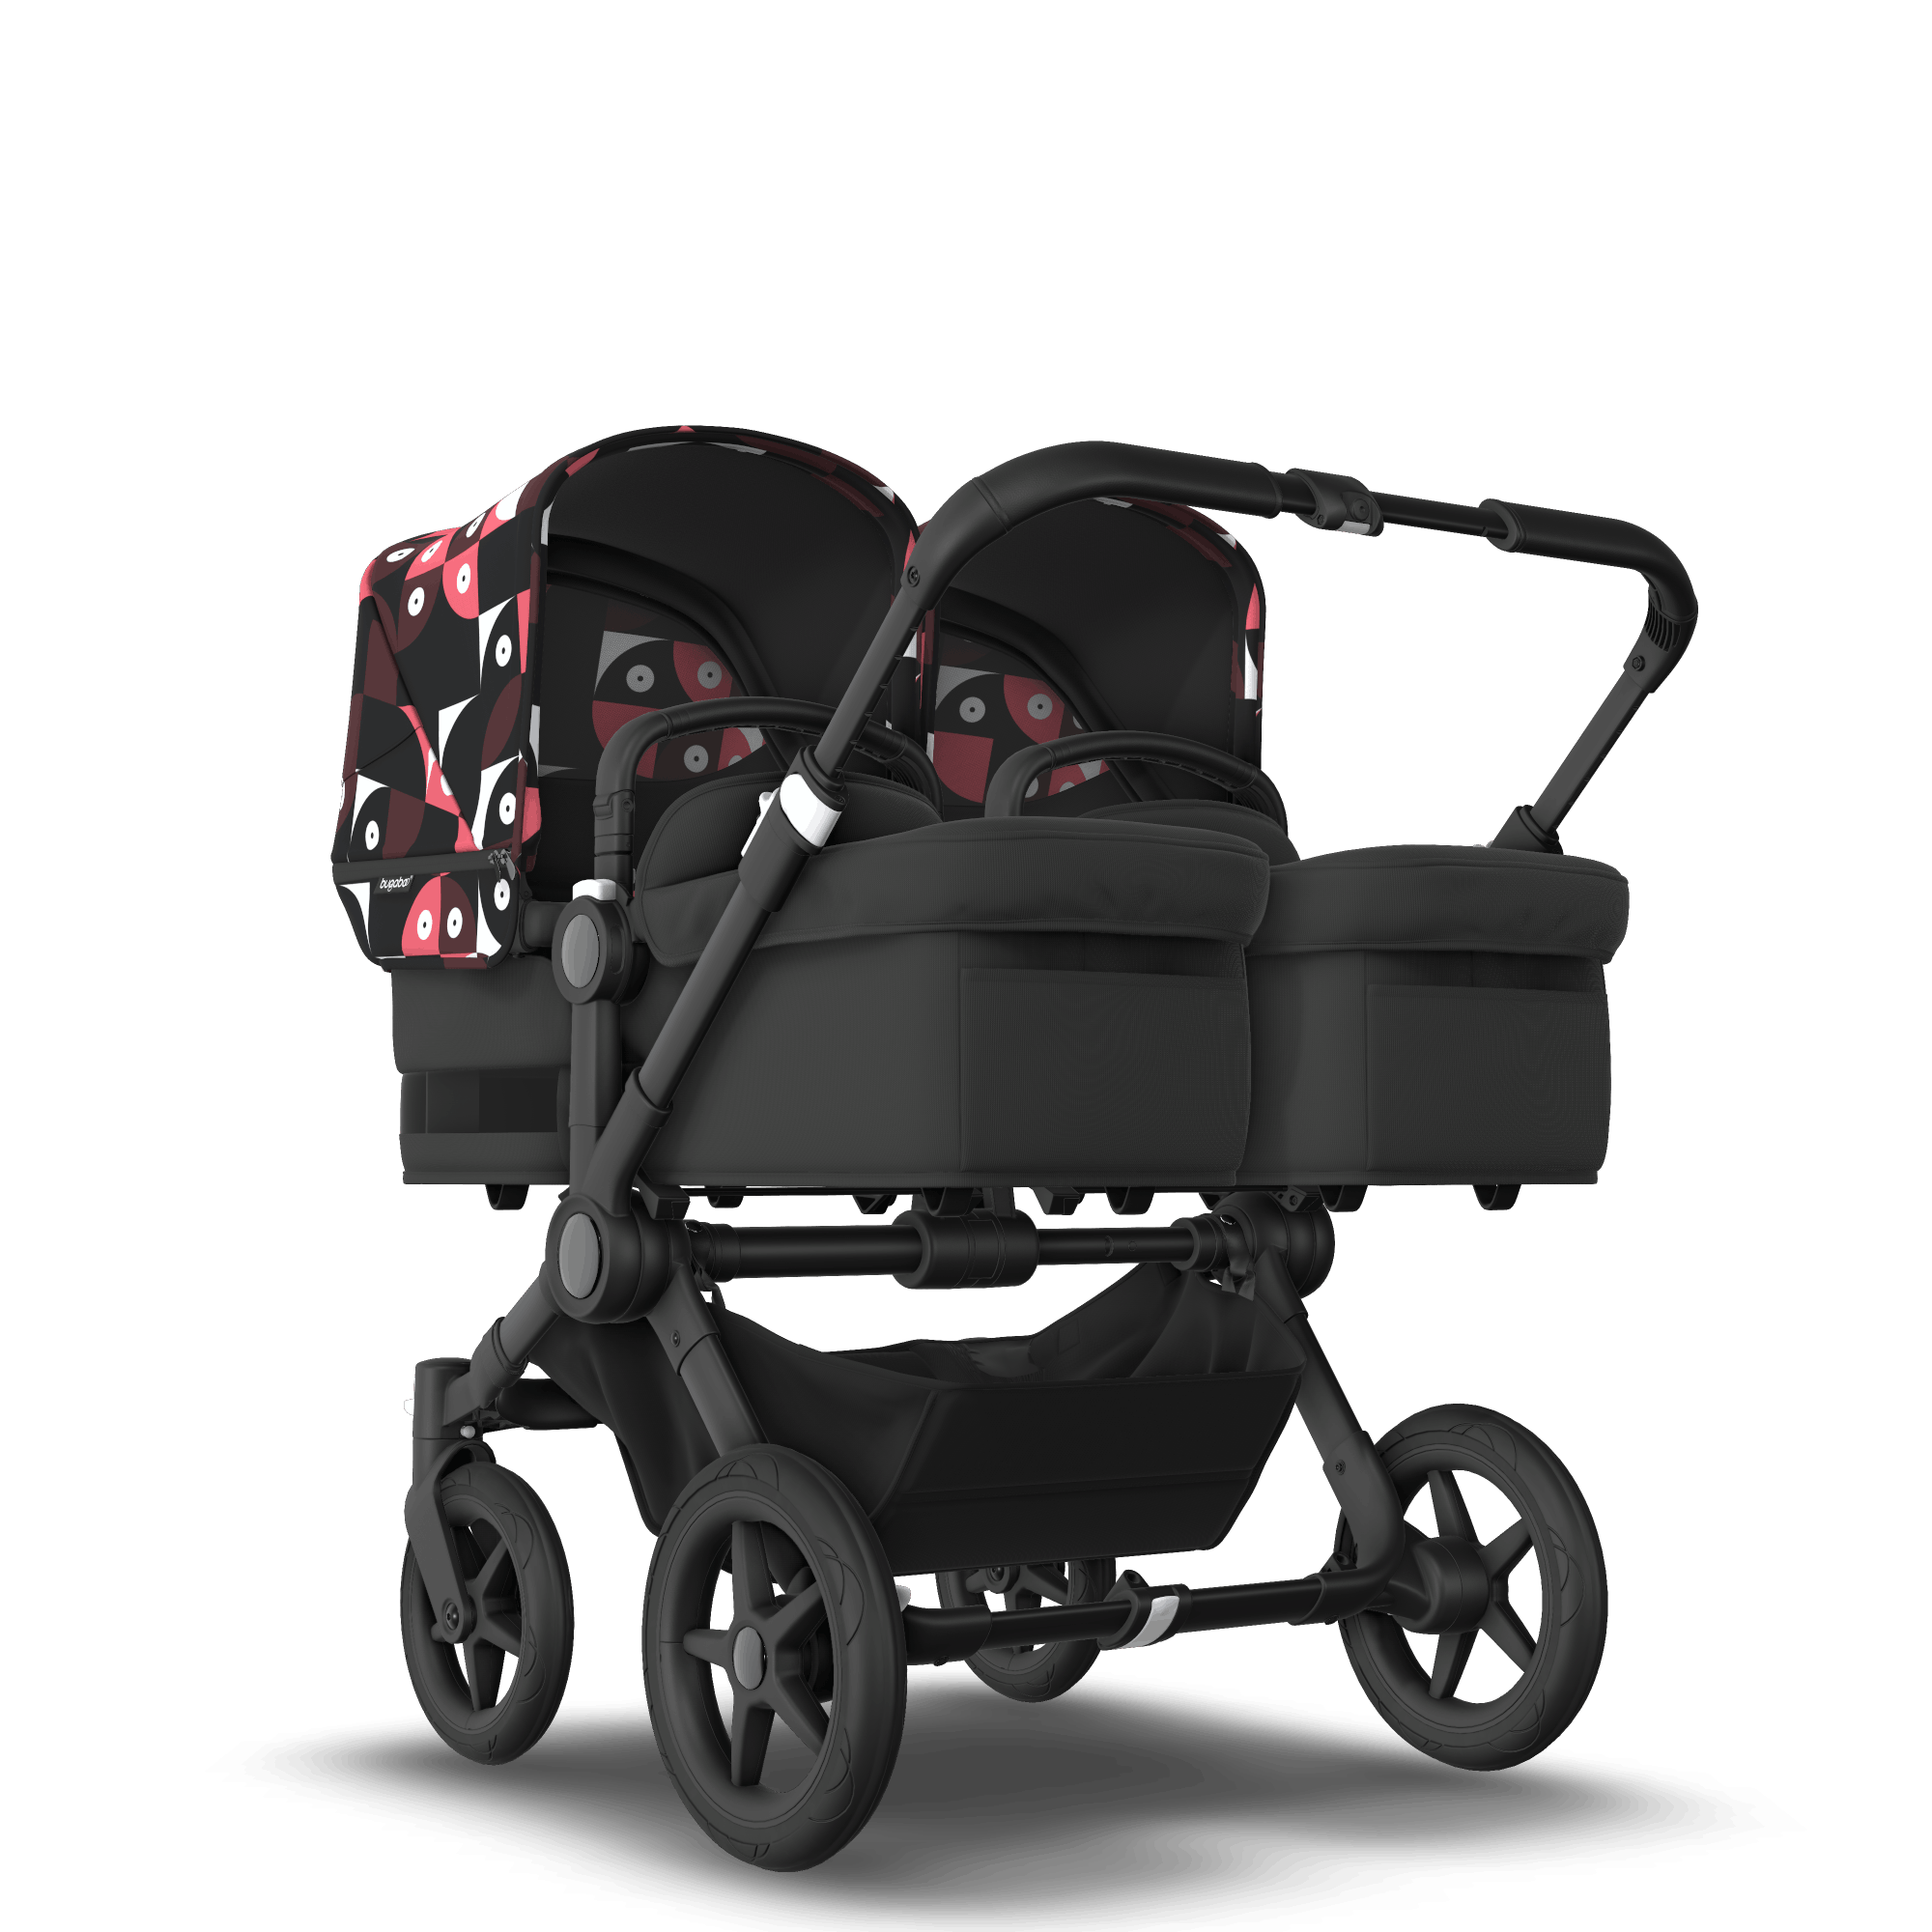 Bugaboo Donkey 5 Twin bassinet and seat stroller black base midnight black fabrics animal explorer pink/red sun canopy